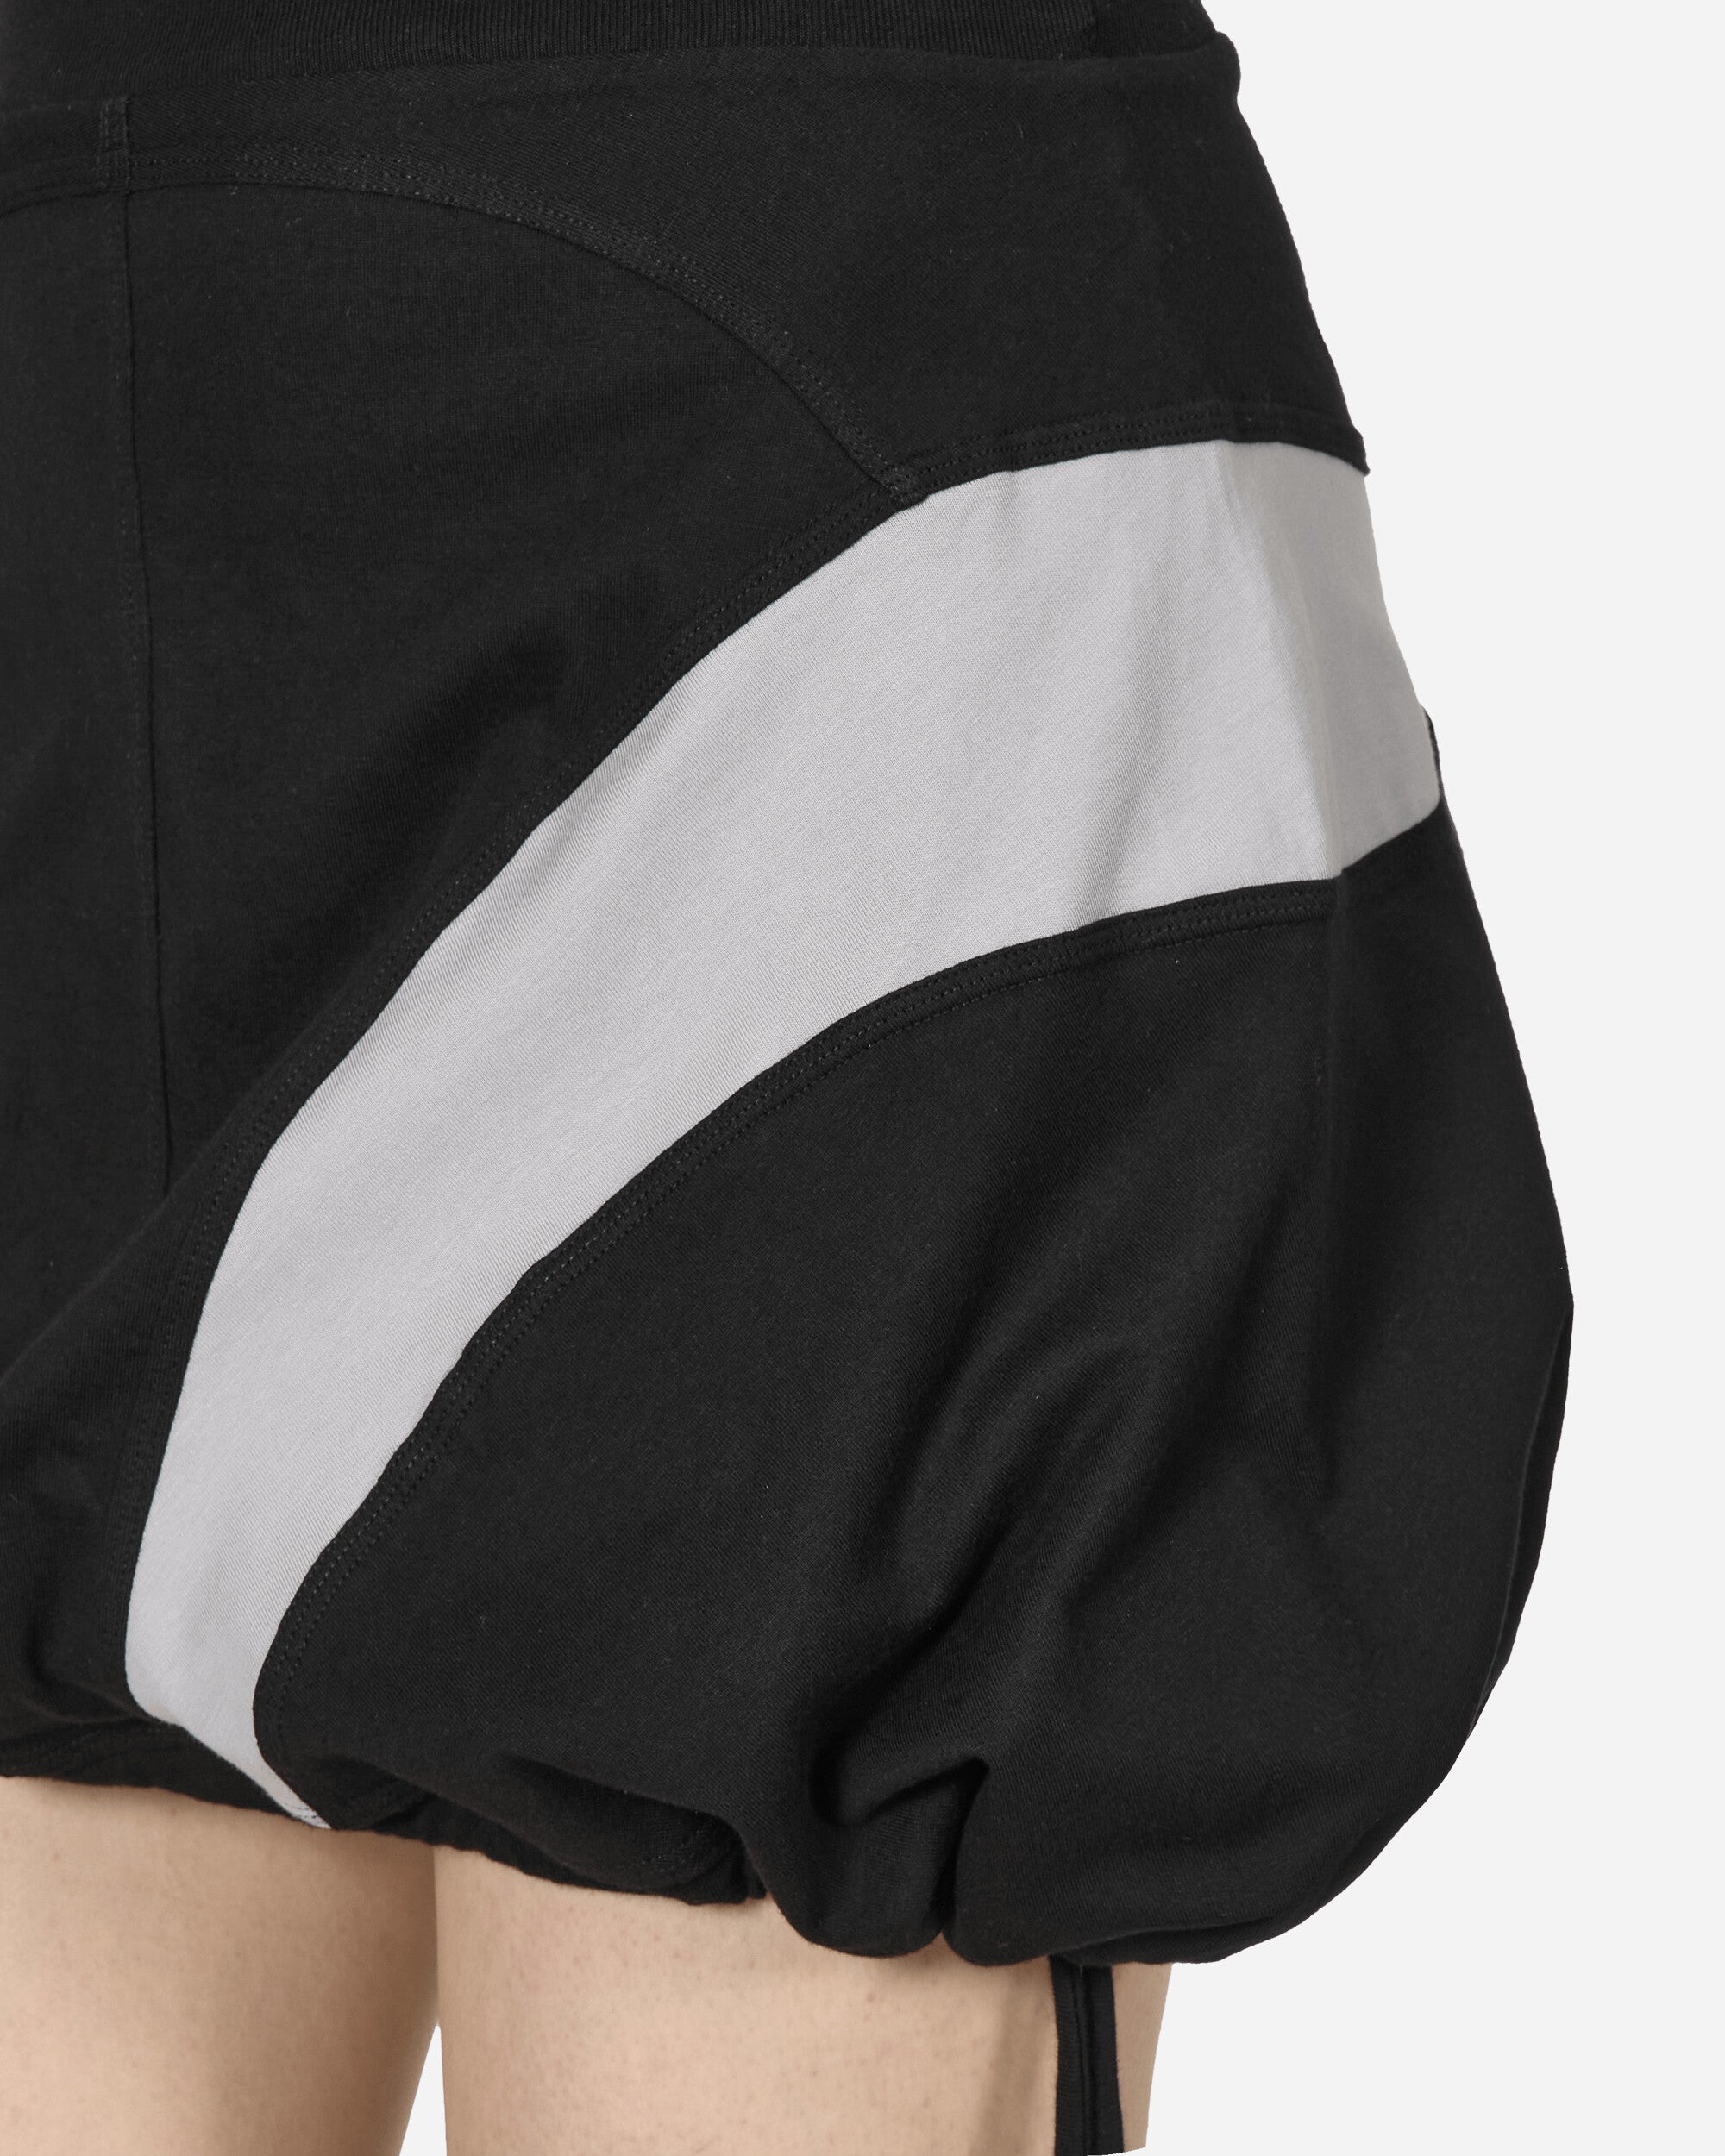 Toile Studios Wmns Plug Transformable Baloon Skirt Black Skirts Midi PLTSBS BLACK